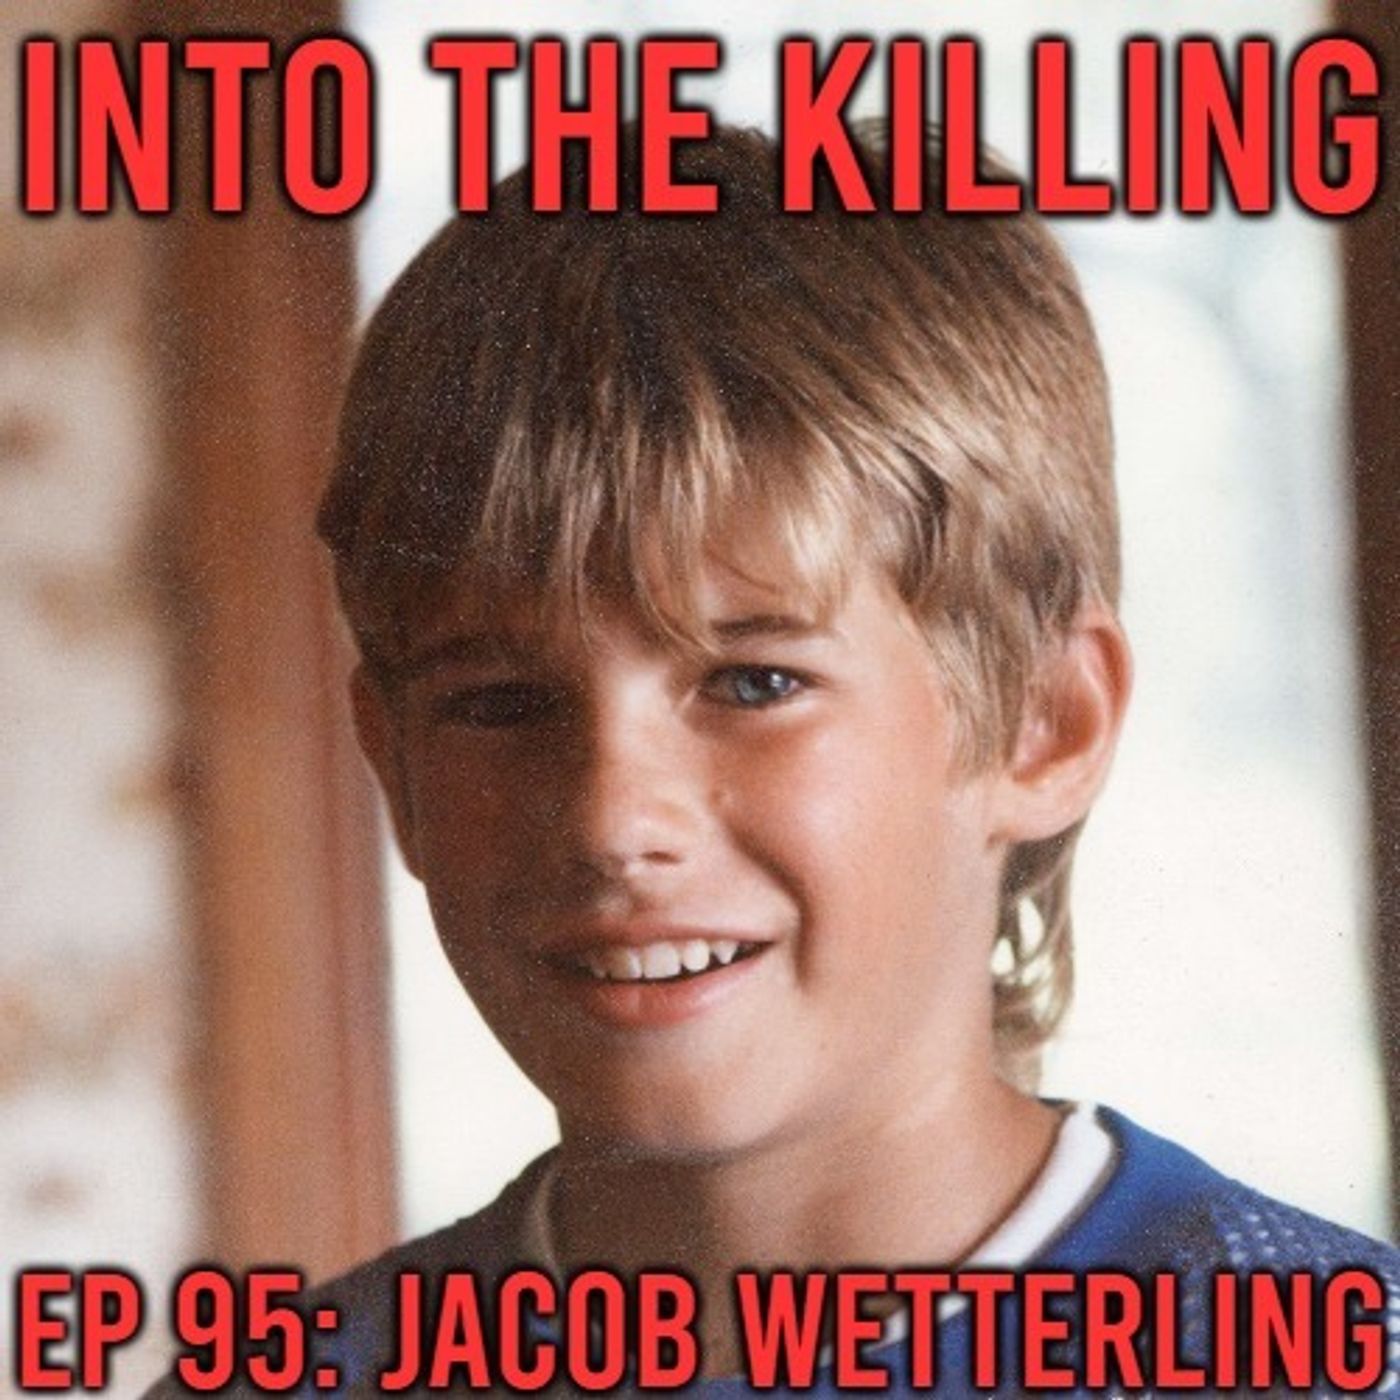 S3 Ep94: Jacob Wetterling